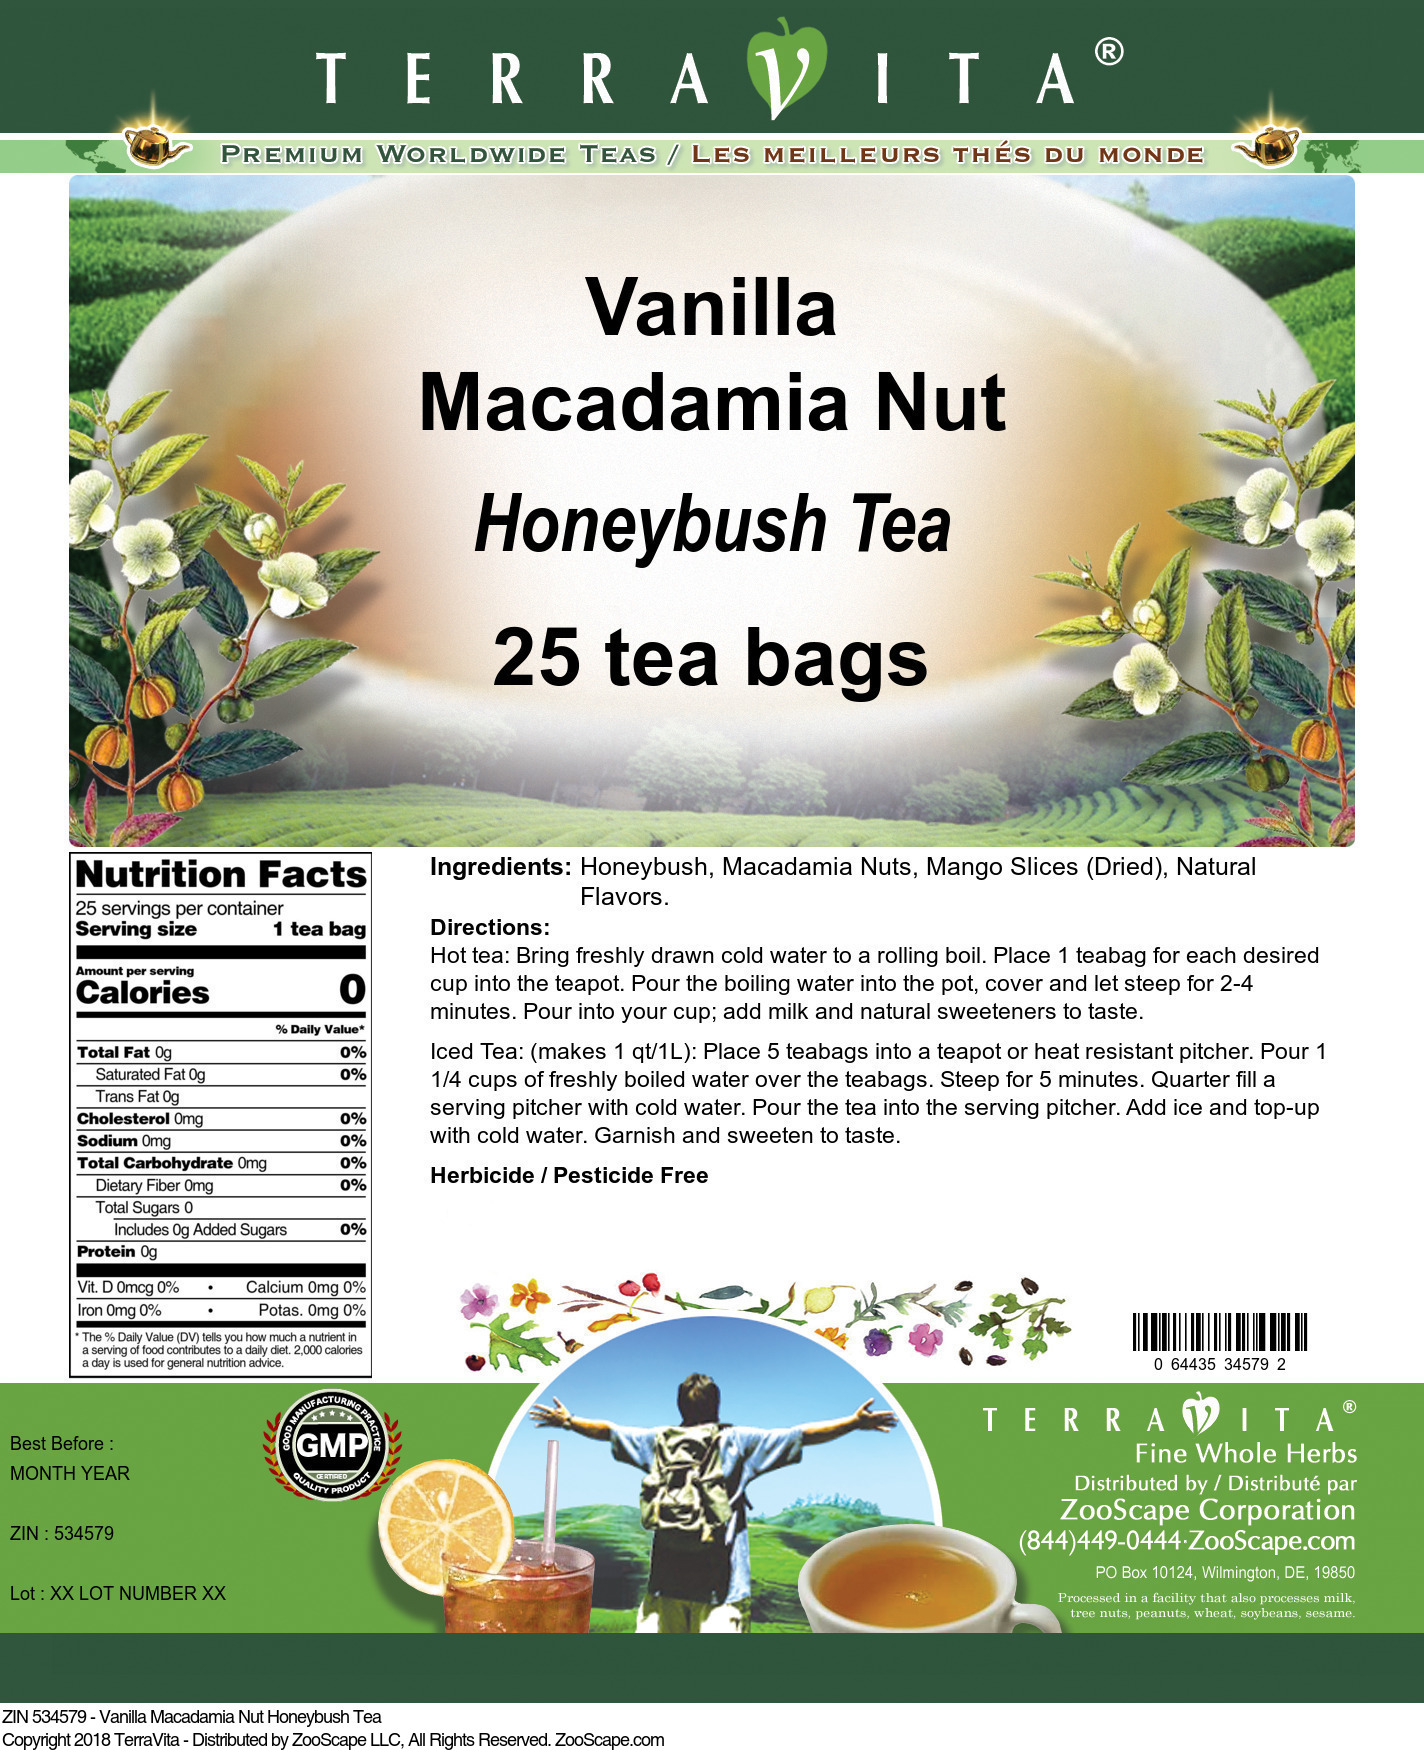 Vanilla Macadamia Nut Honeybush Tea - Label